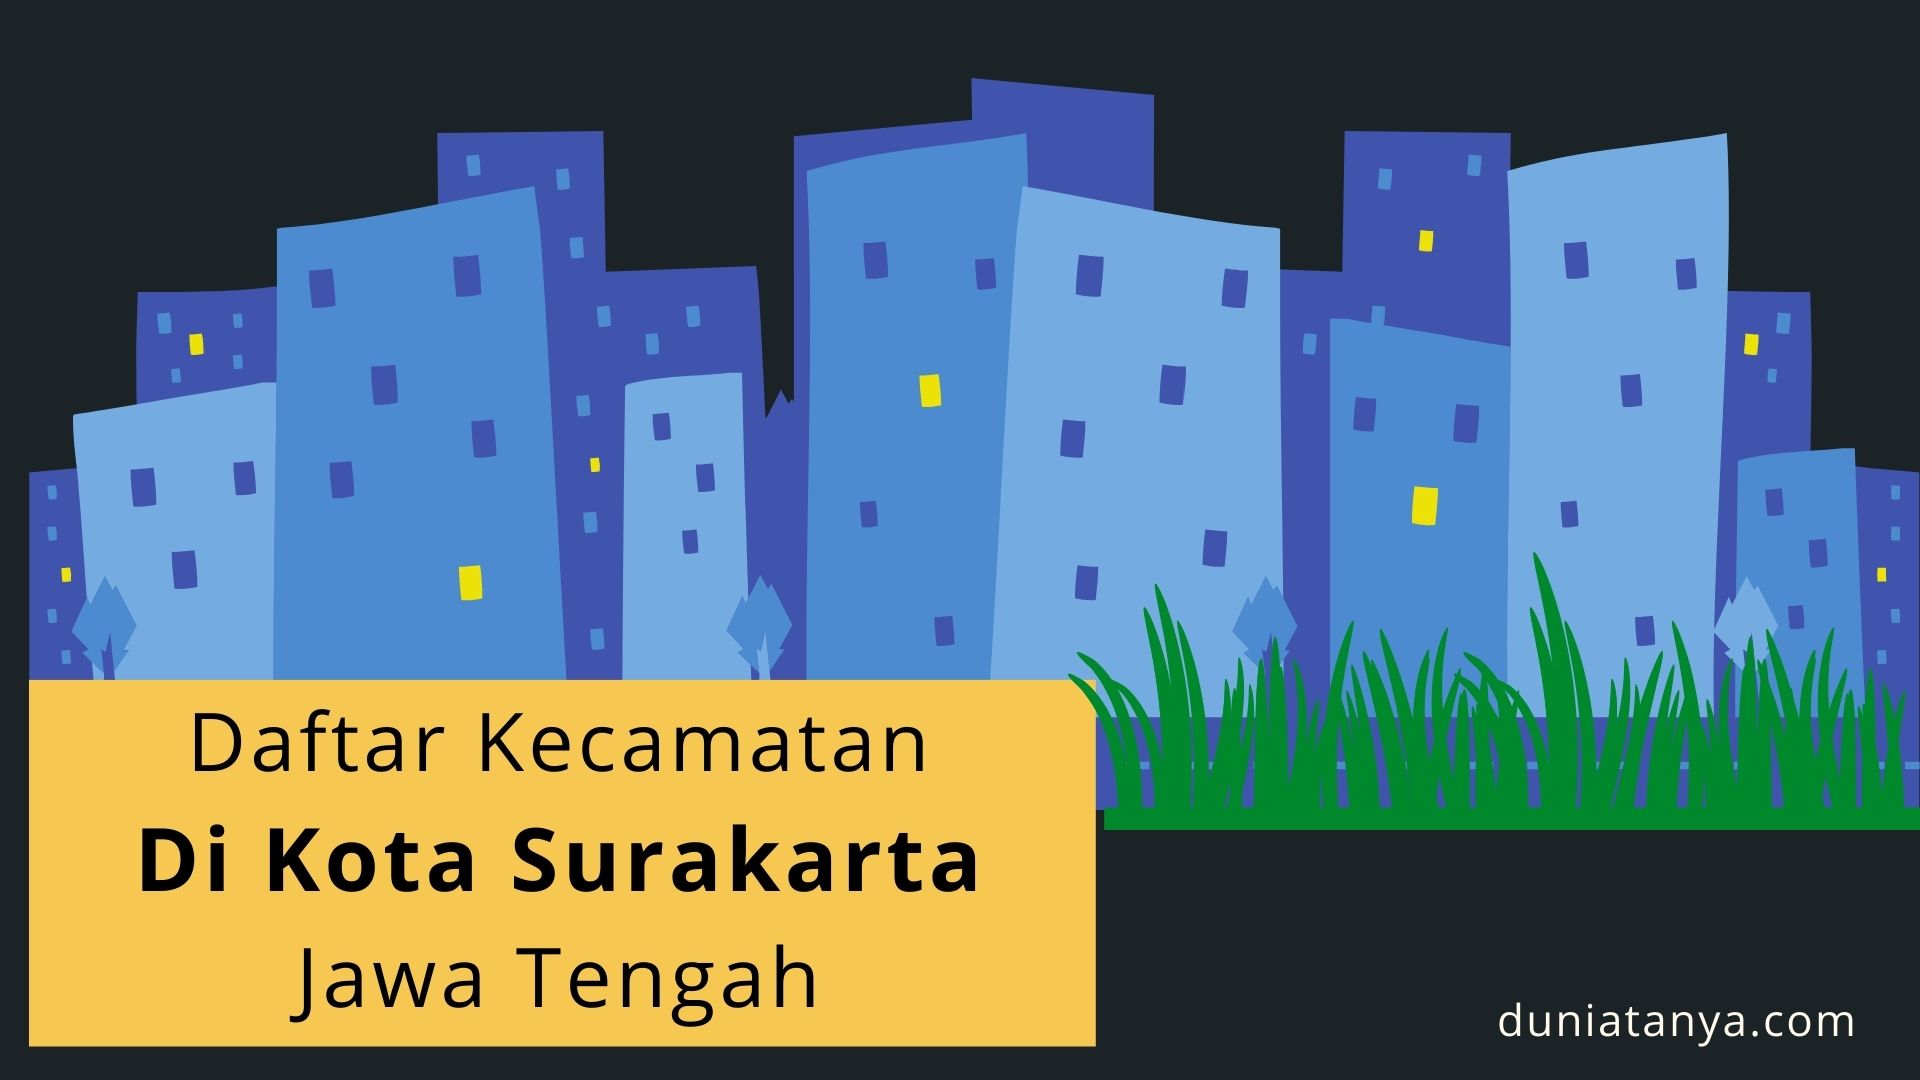 You are currently viewing Daftar Kecamatan Di Kota Surakarta,Jawa Tengah